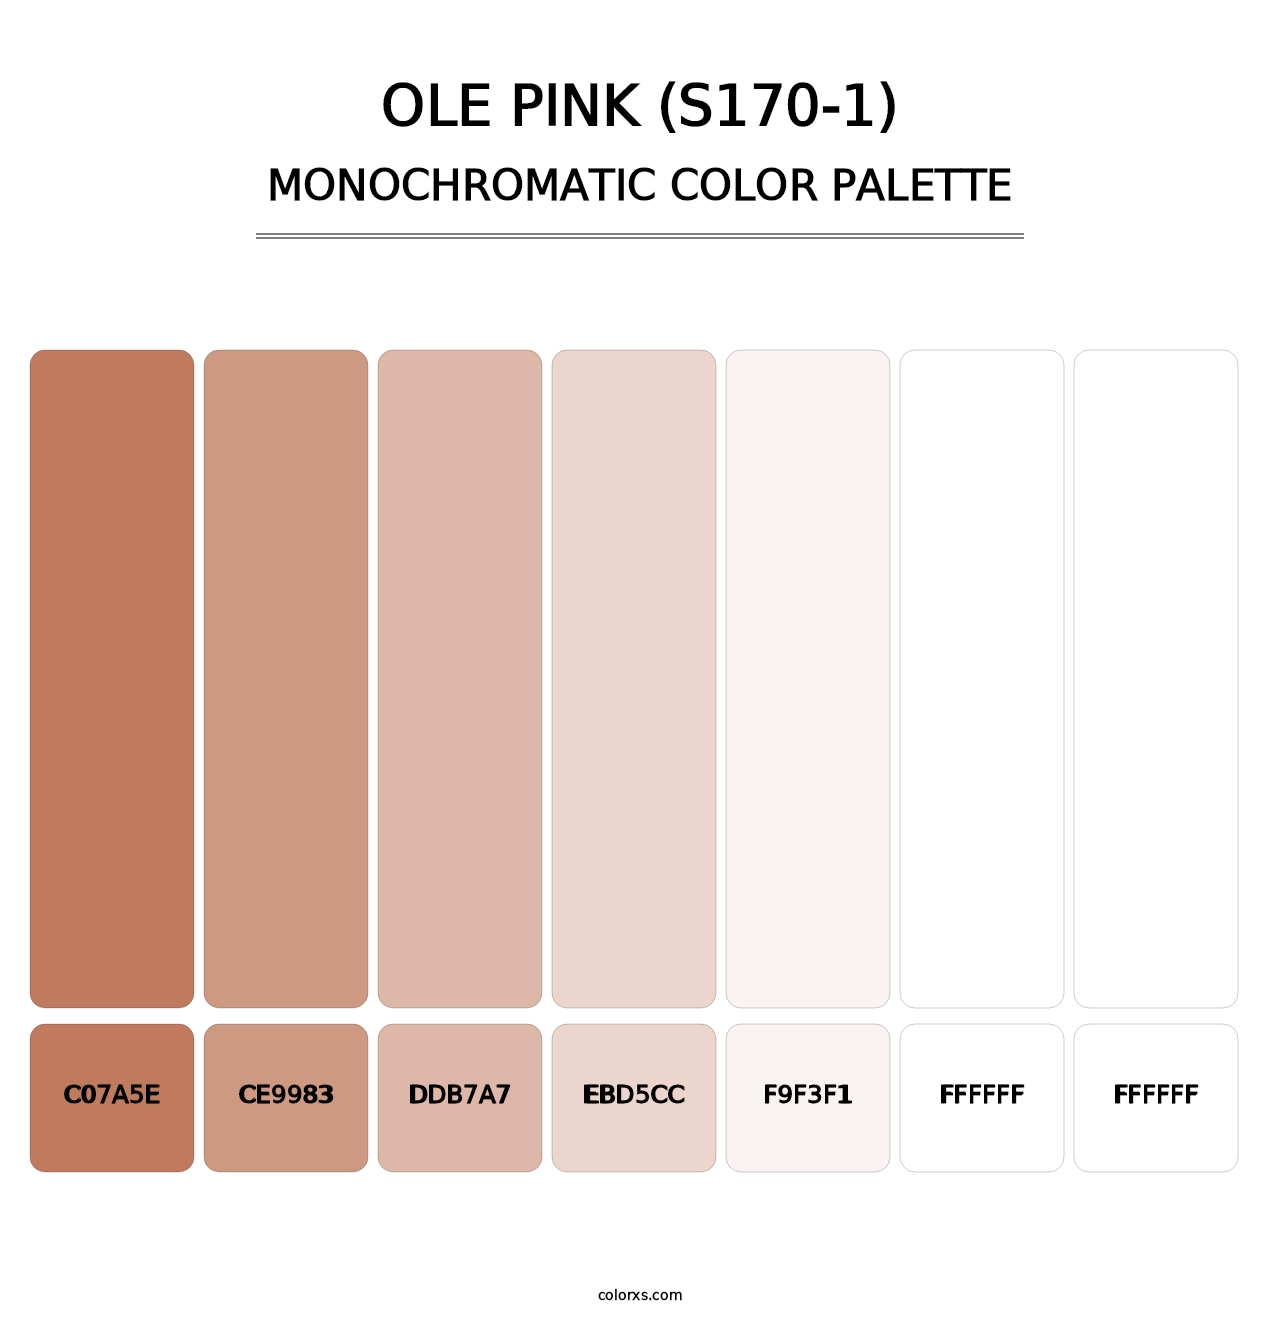 Ole Pink (S170-1) - Monochromatic Color Palette